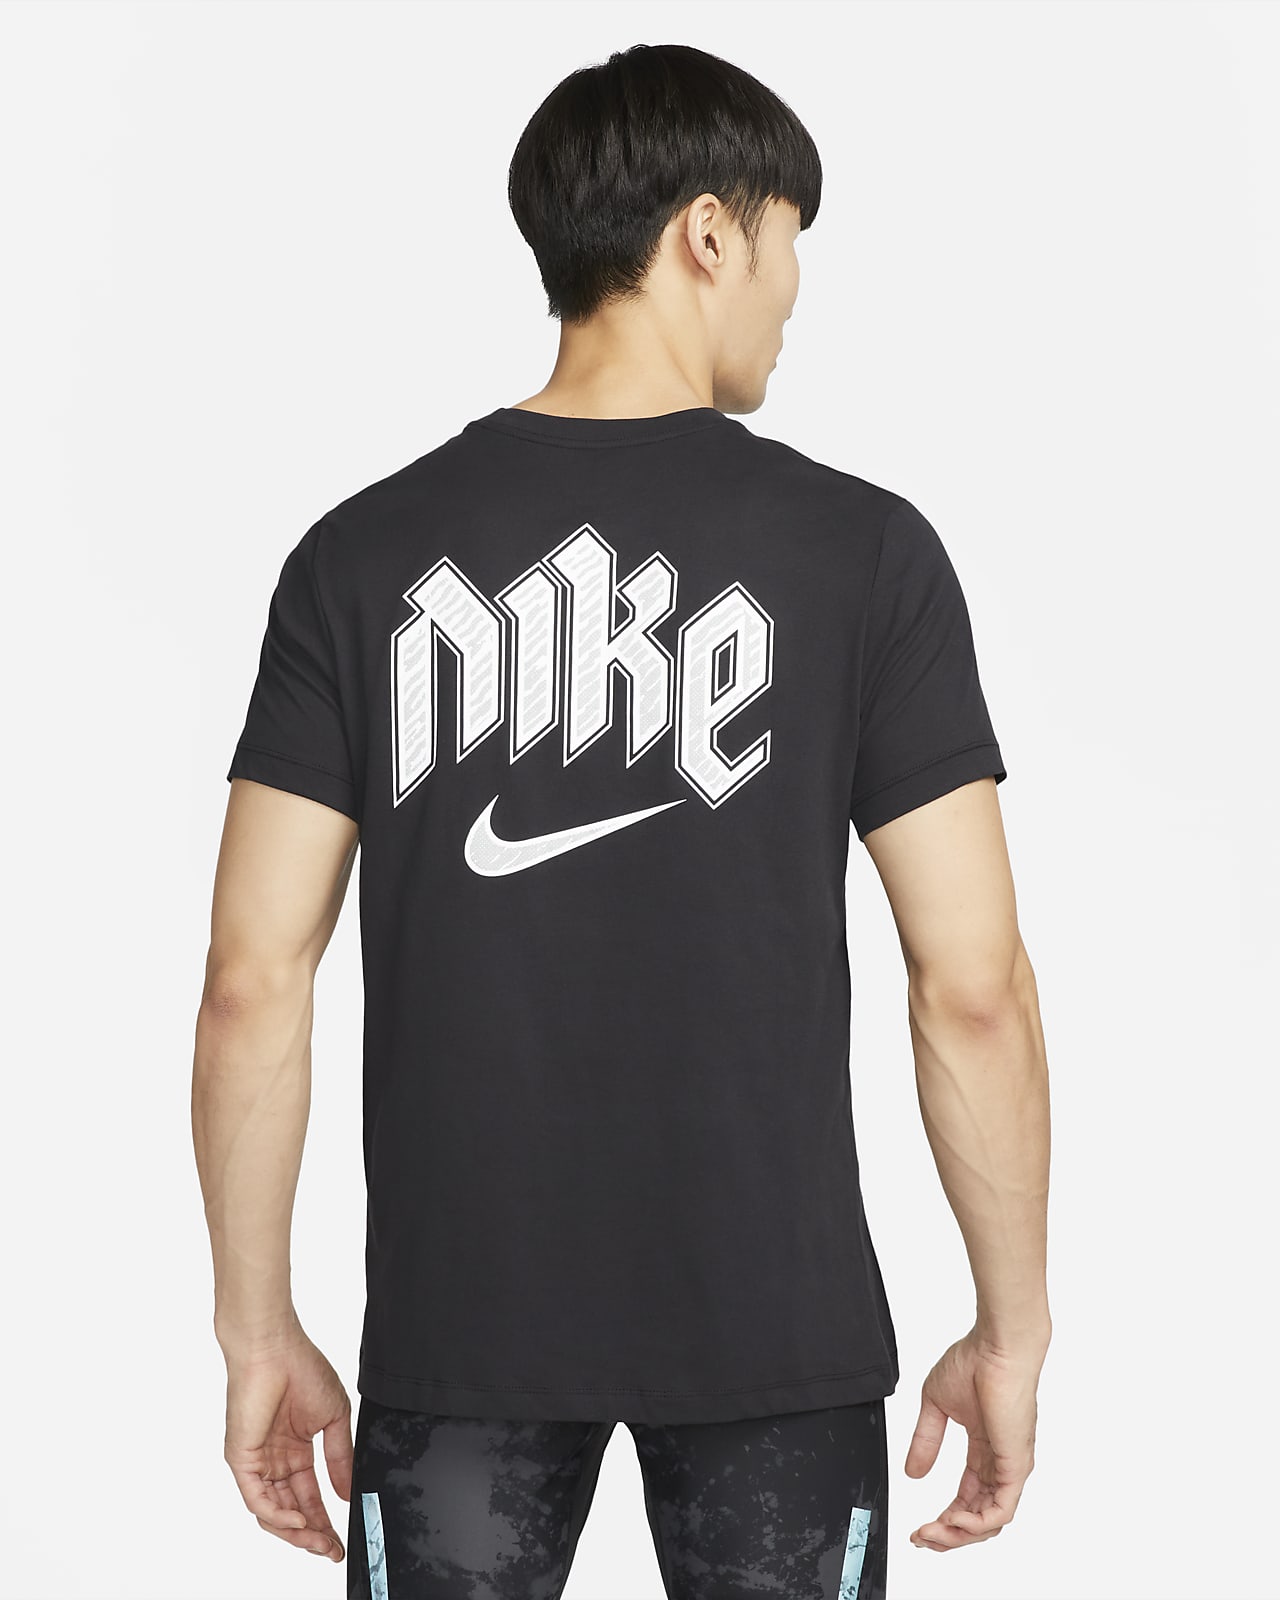 Nike Dri-FIT Run Division Men's Running T-Shirt.